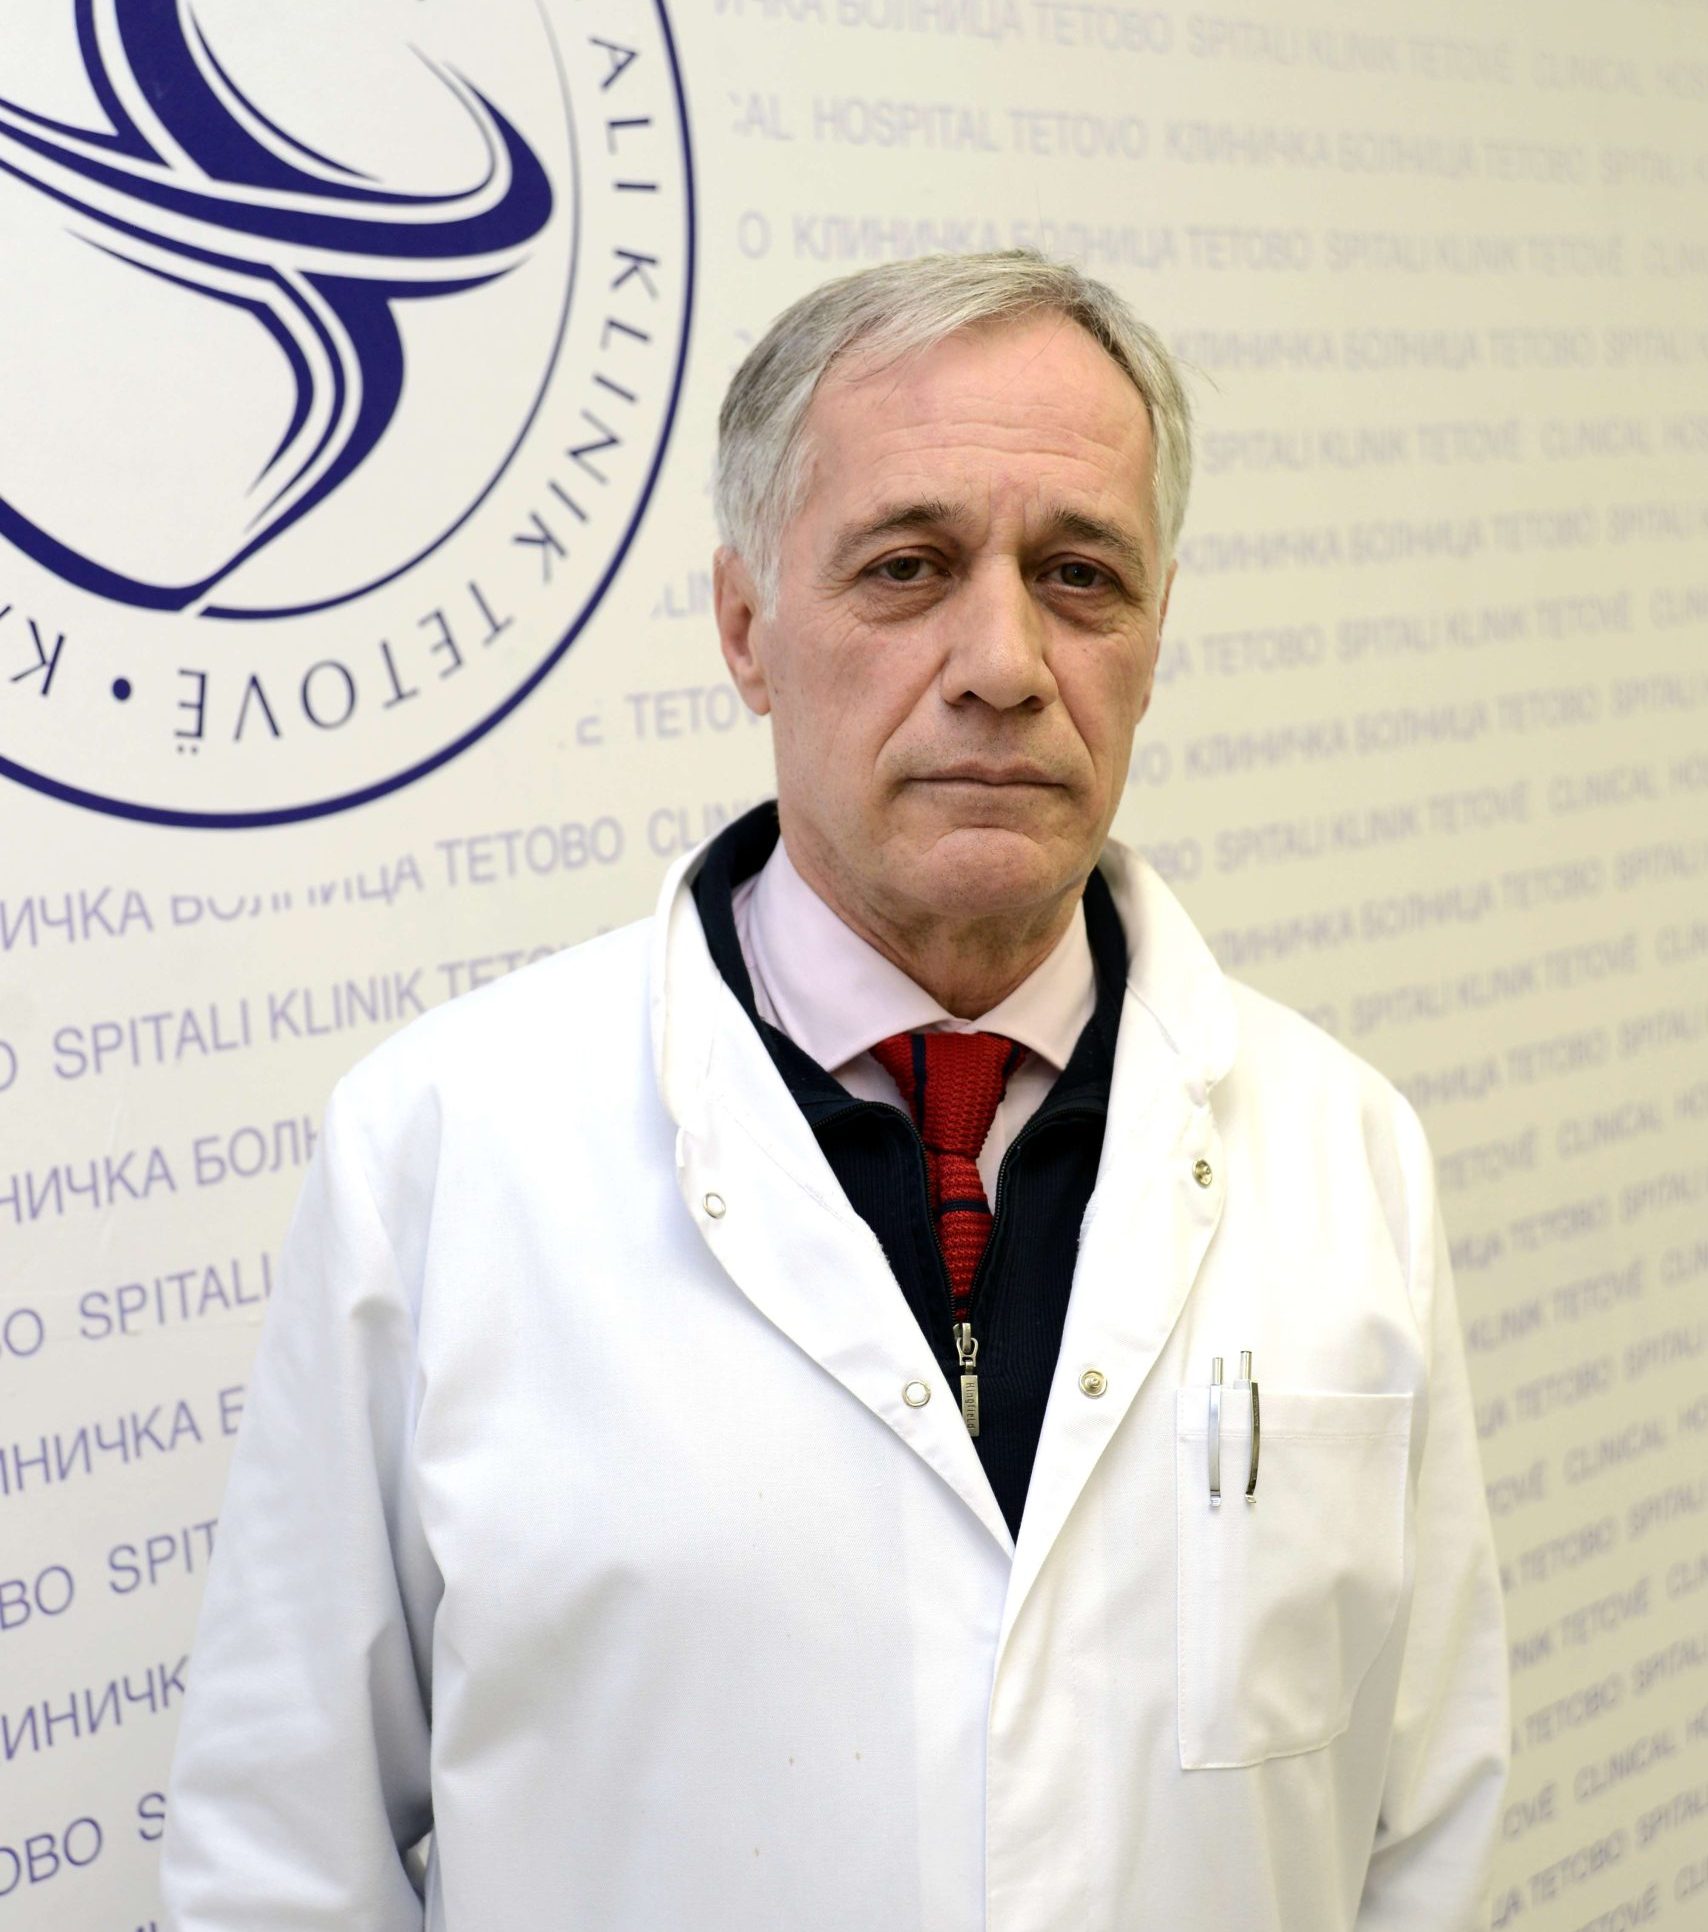 spec. dr. Fatmir Omeri